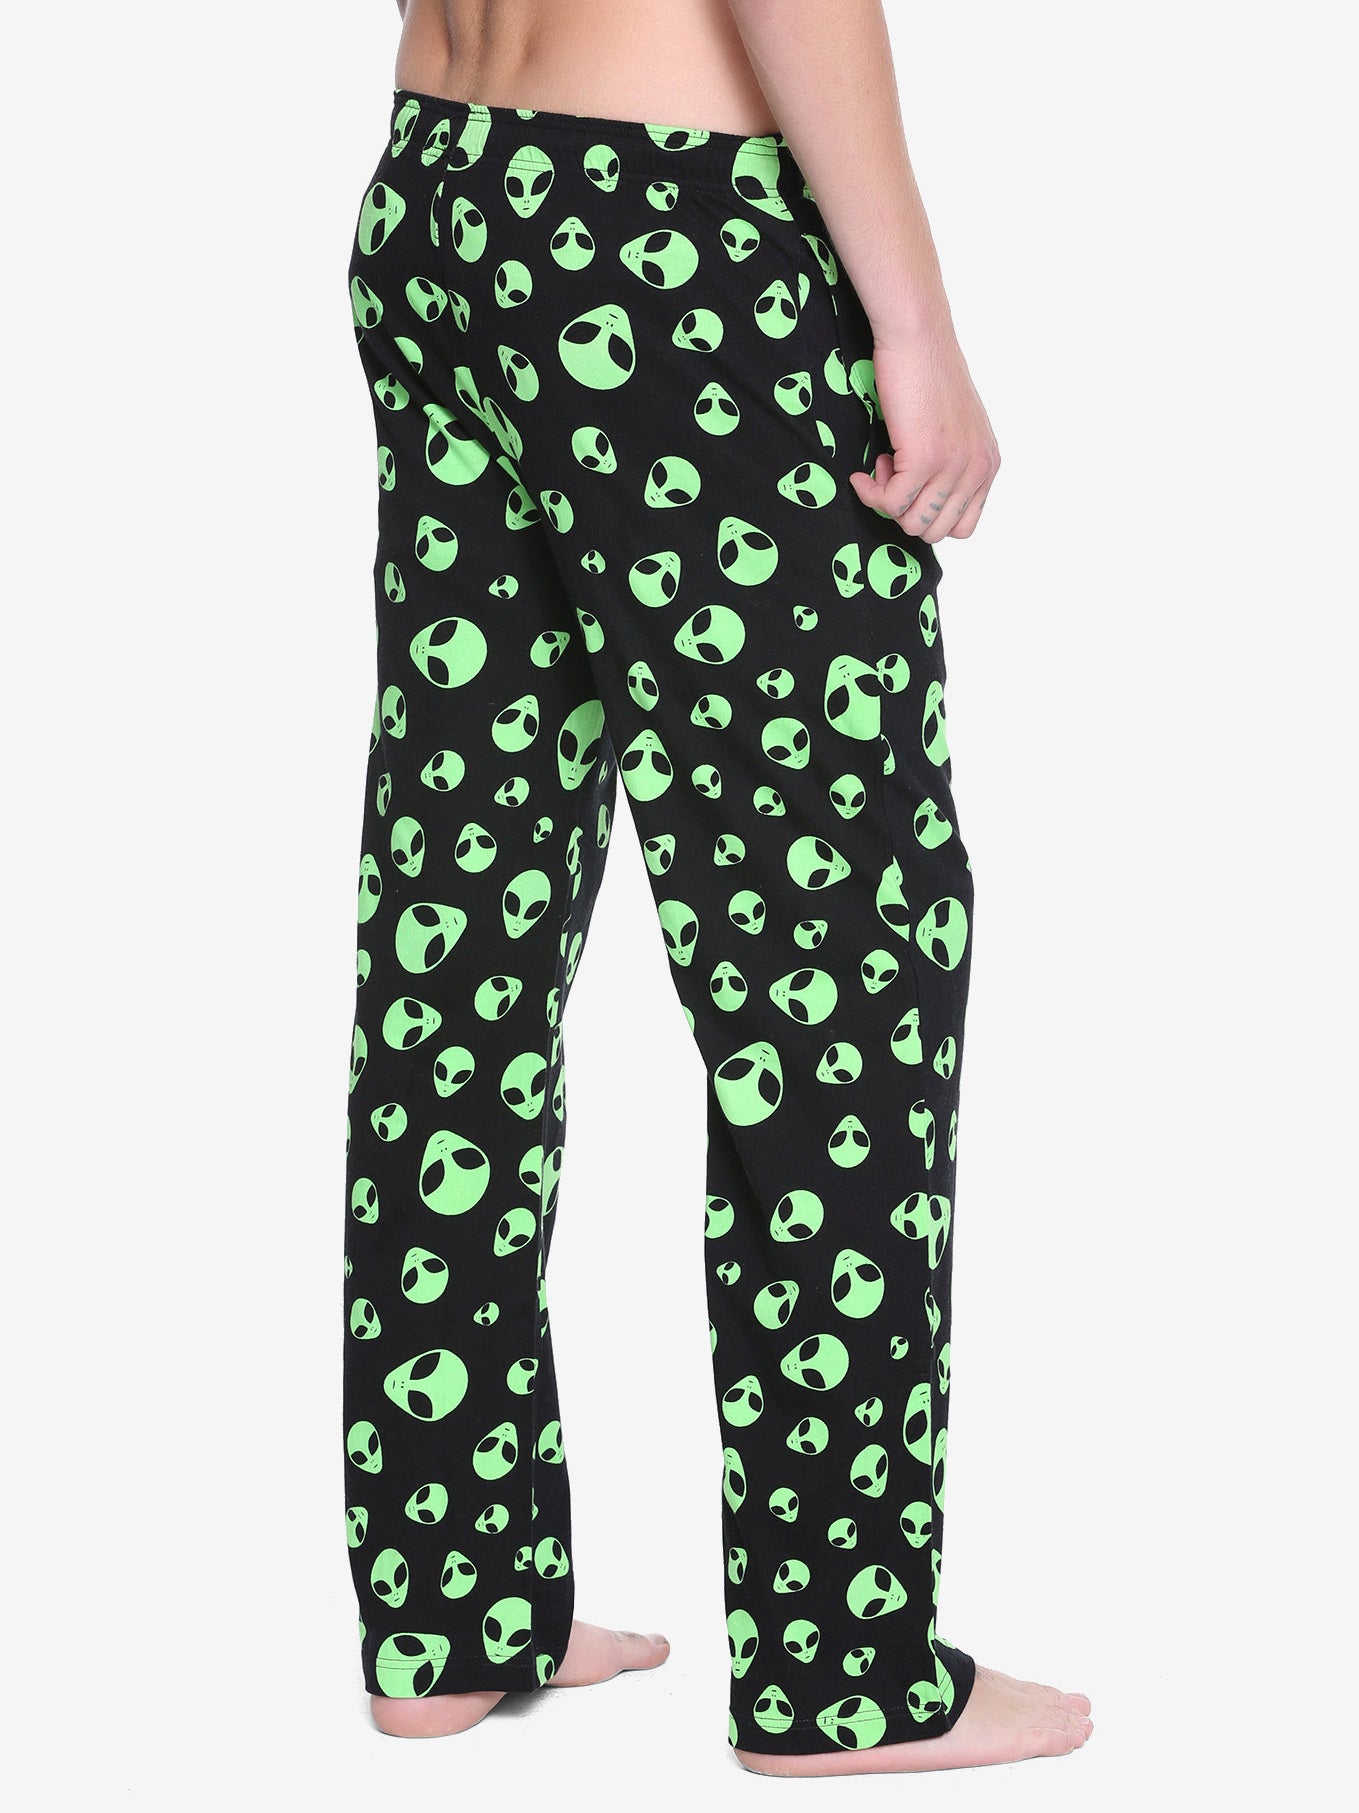 Alien Pajamas bottoms